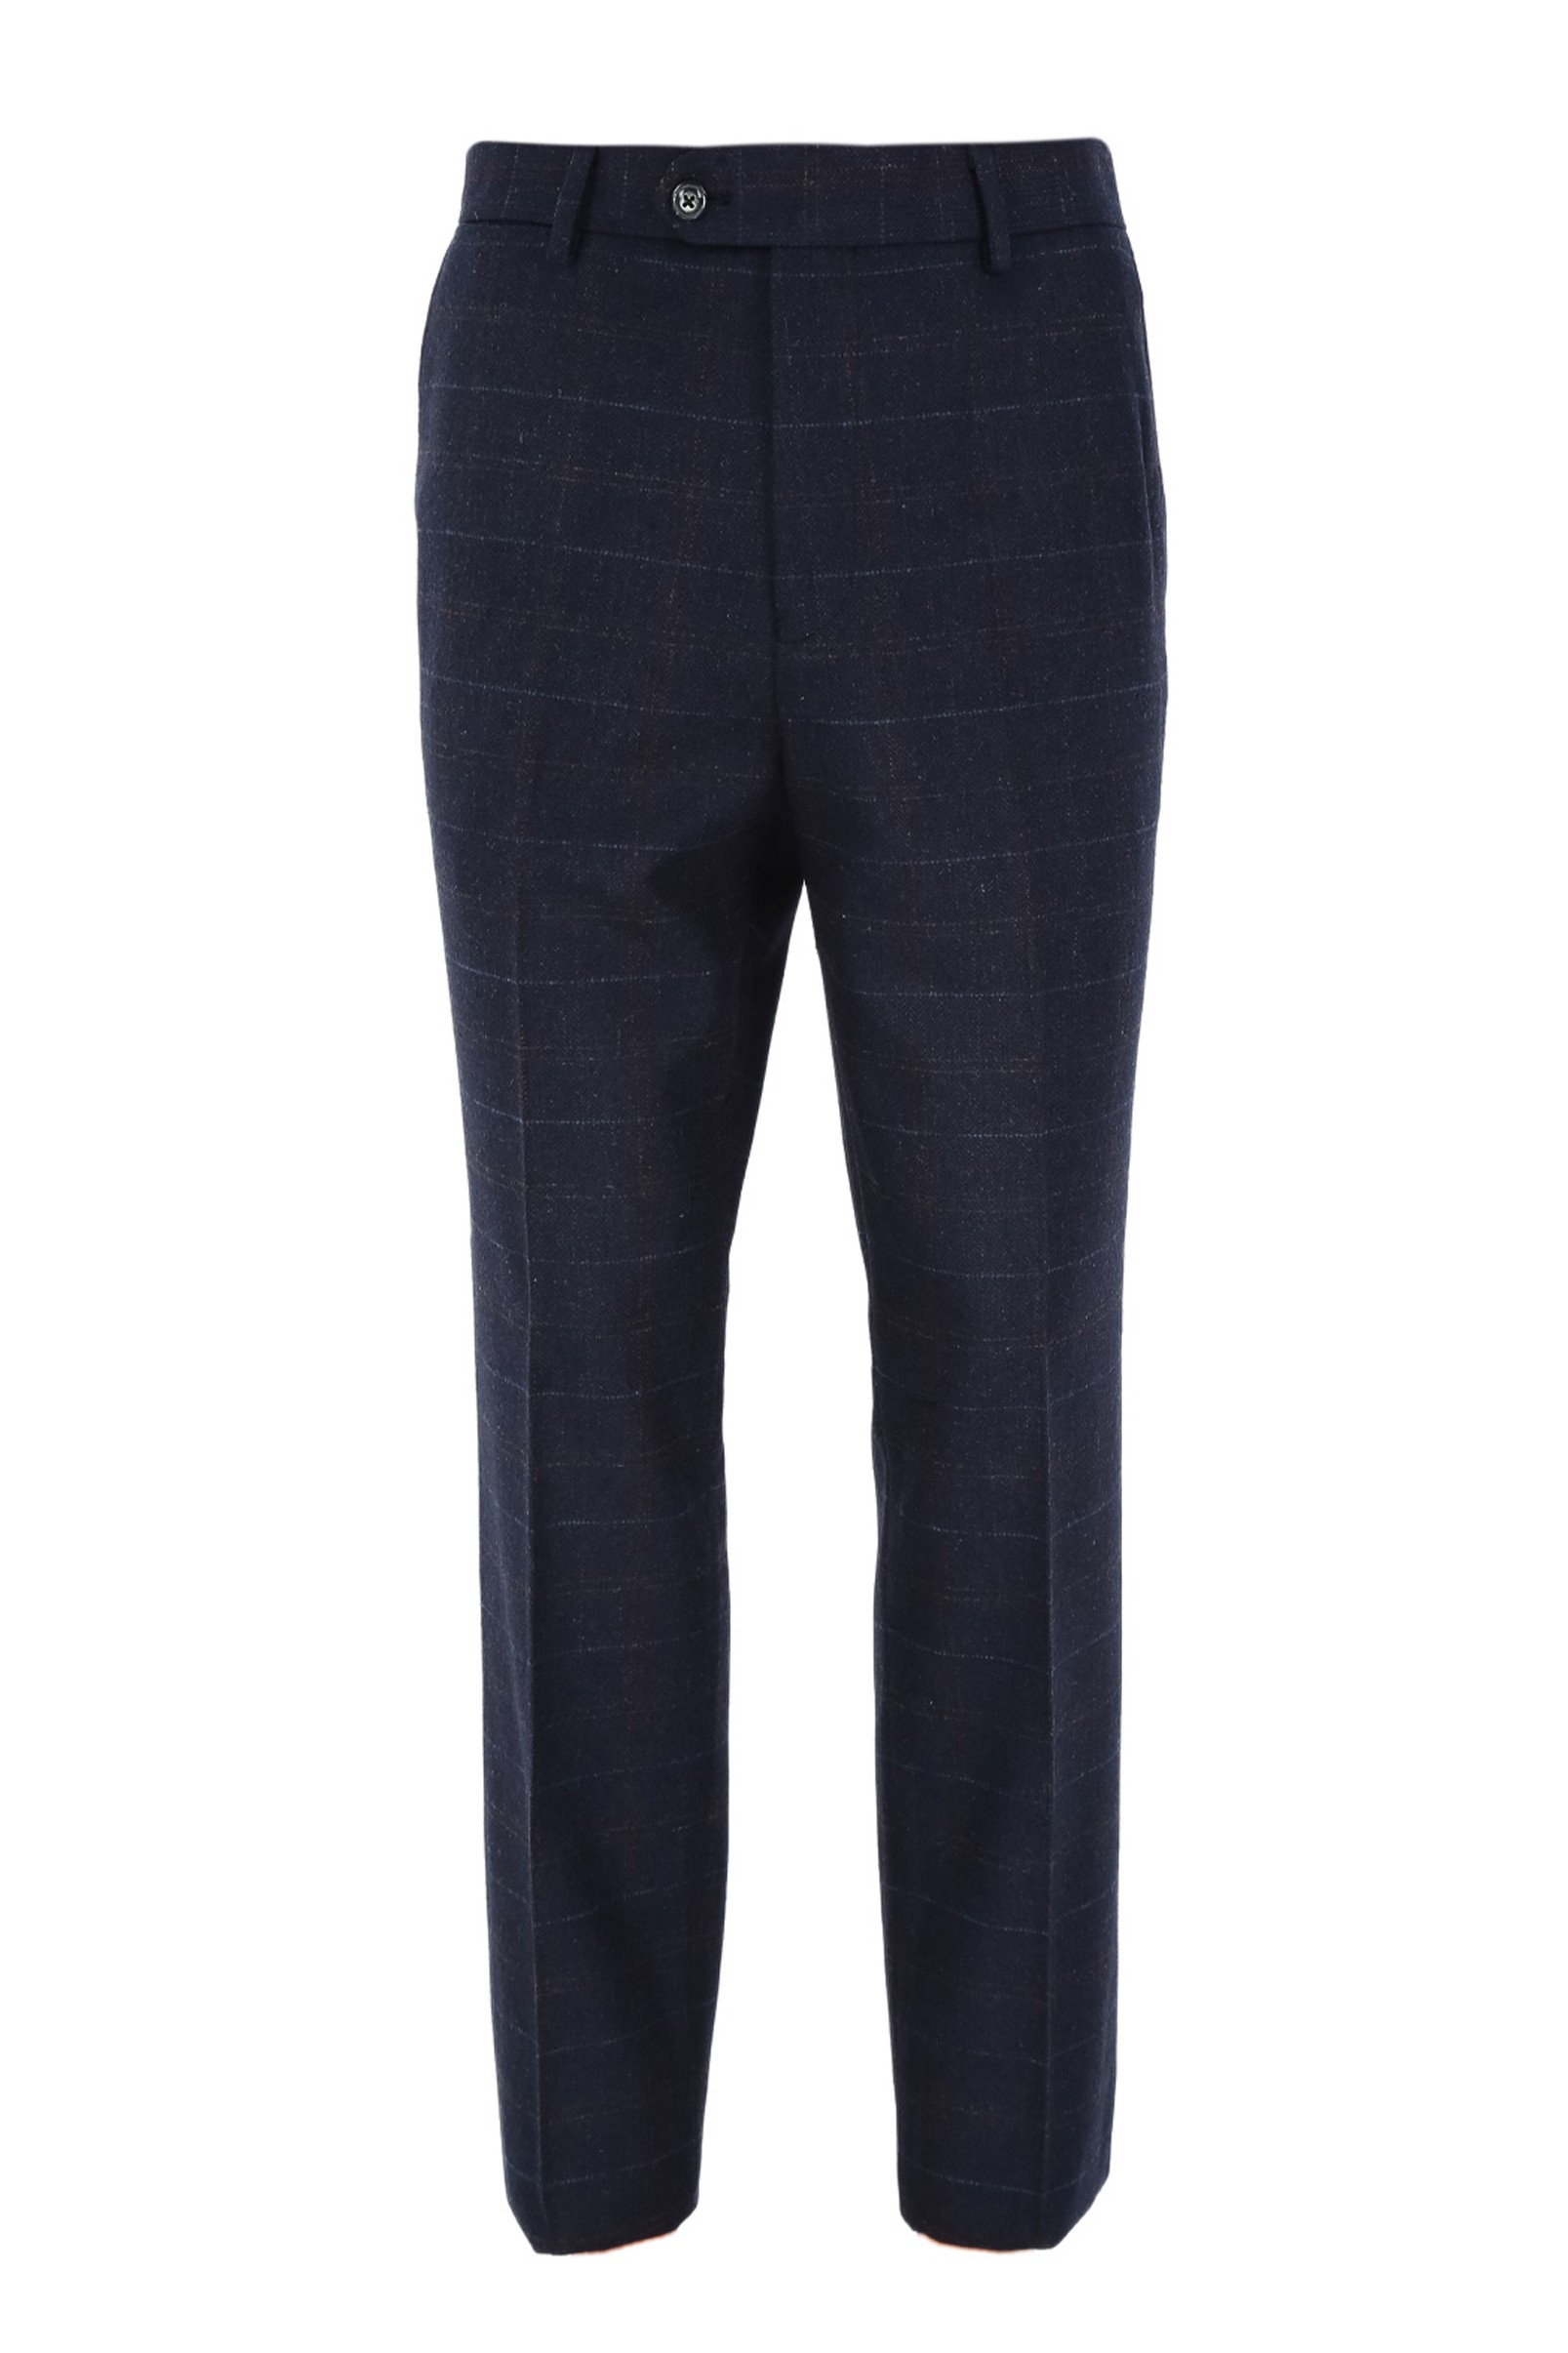 Men's Tweed Windowpane Tailored Fit Navy Trousers - RYAN